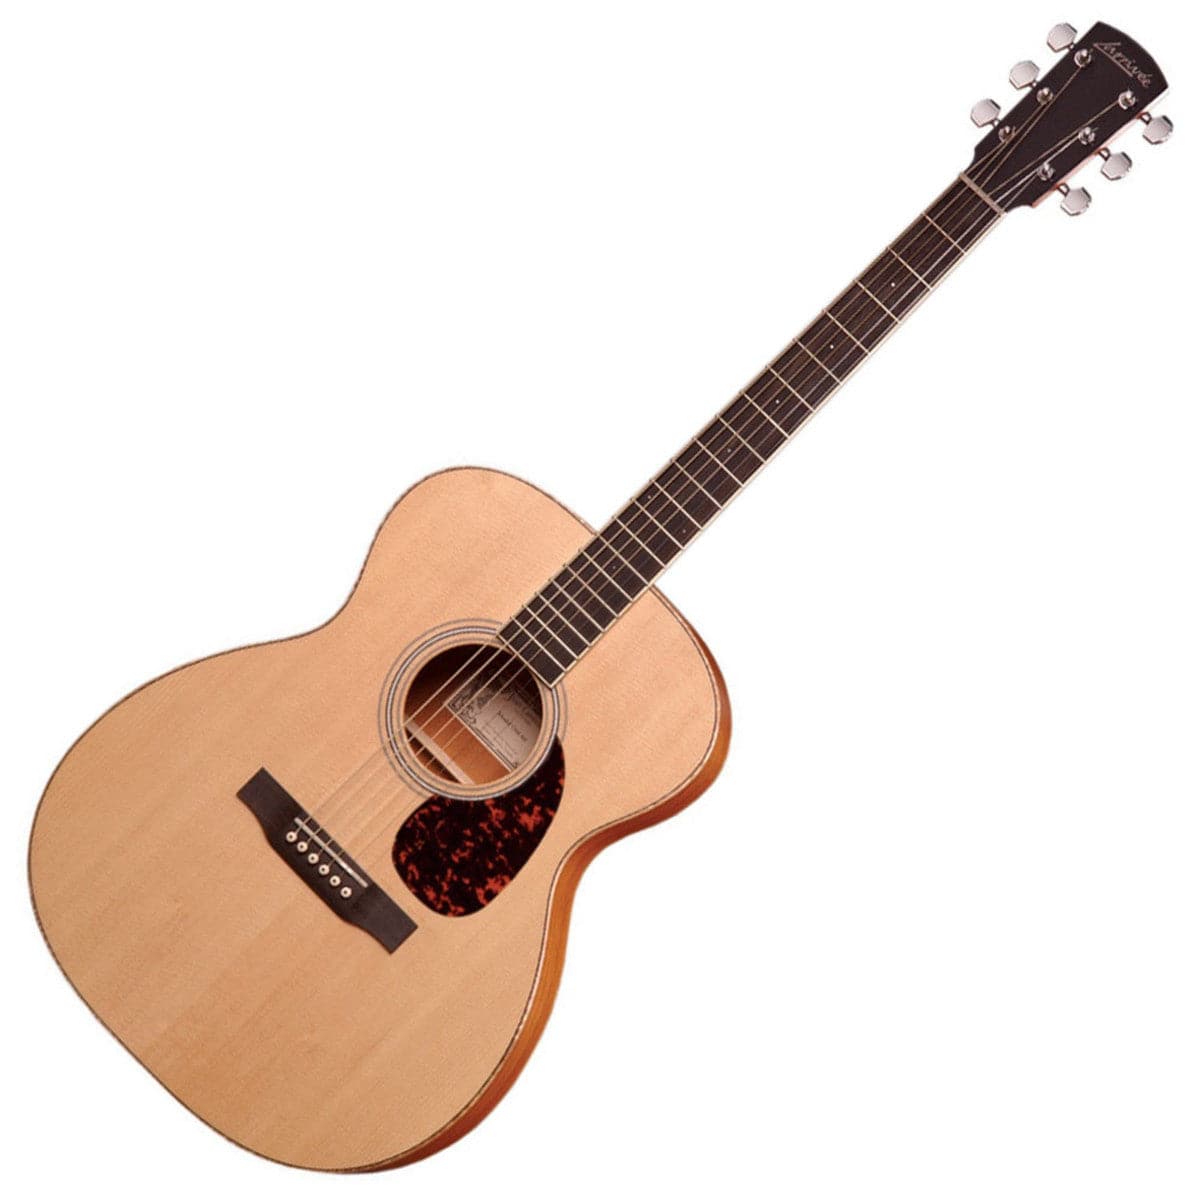 Larrivee OM-02 Acoustic Guitar - Natural